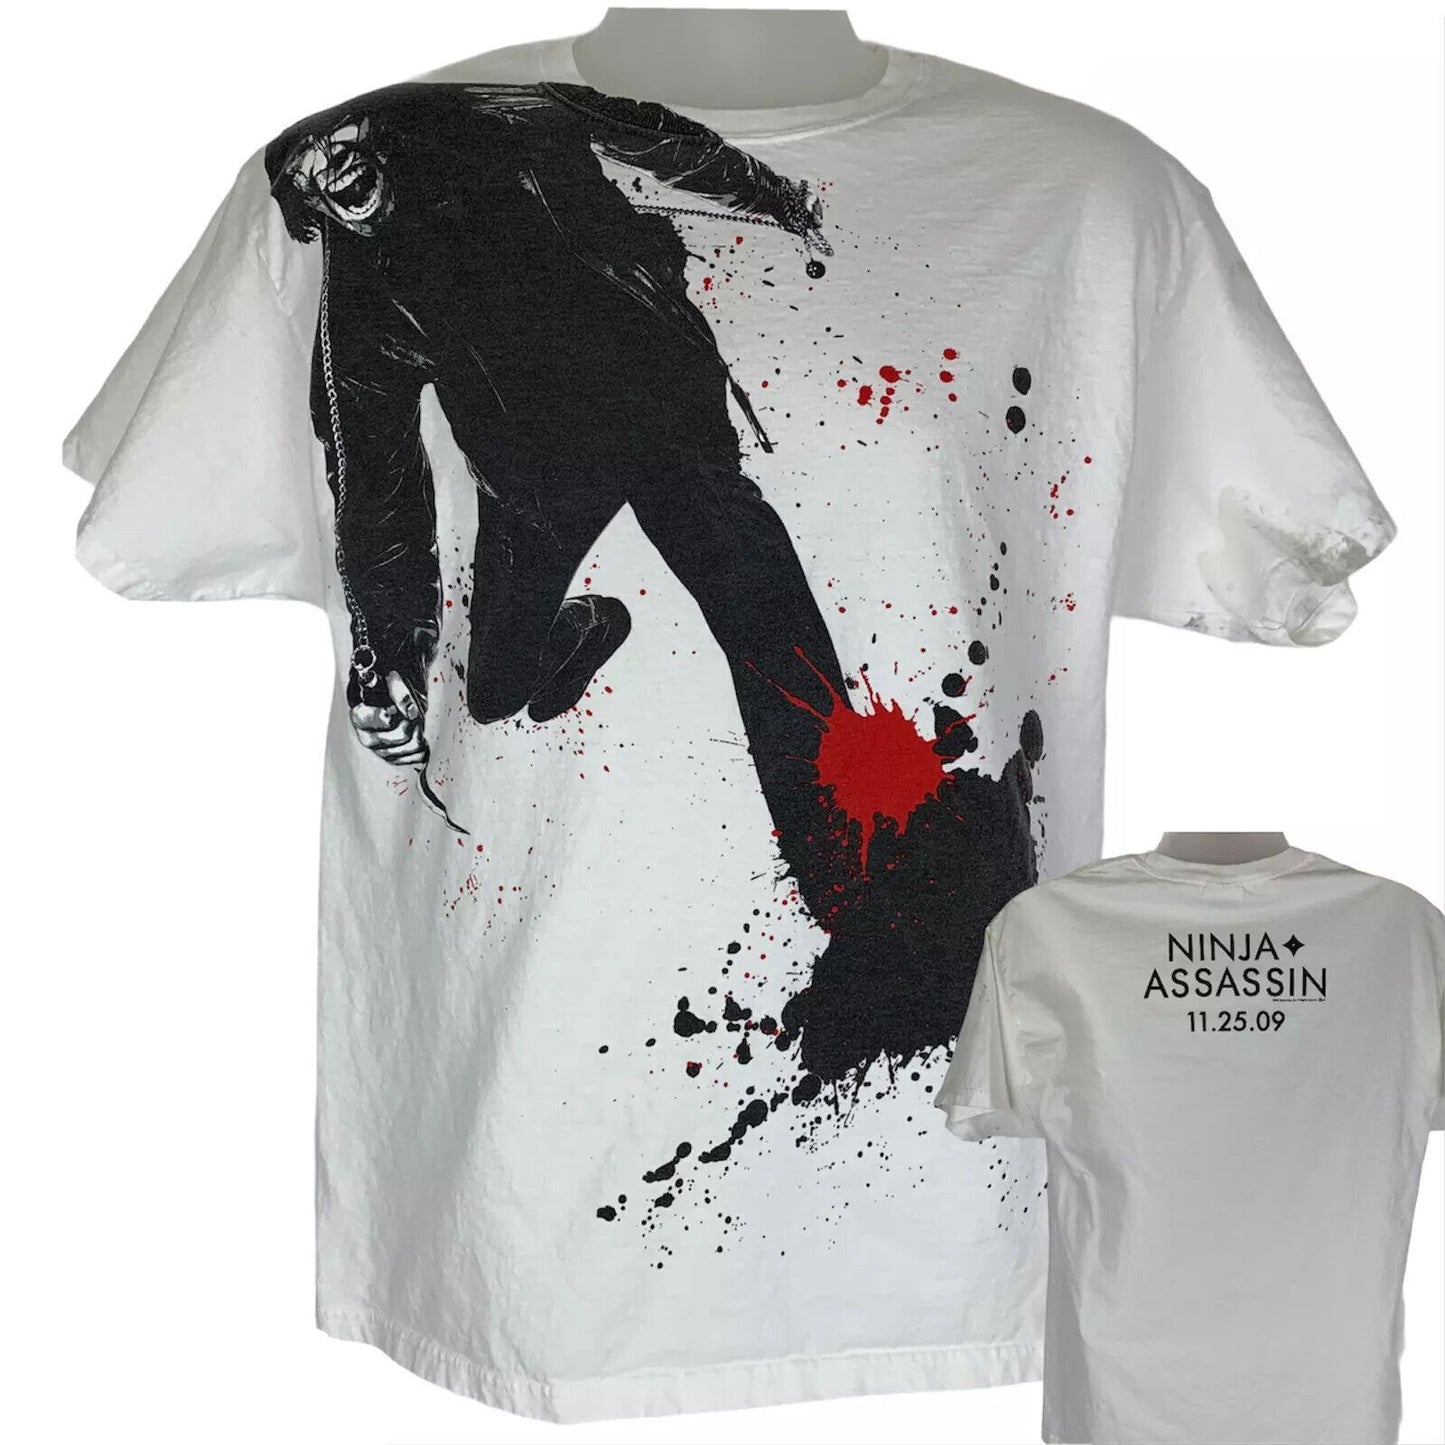 Ninja Assassin T Shirt 2009 Movie Film Promotional Martial Arts Rain Tee Large